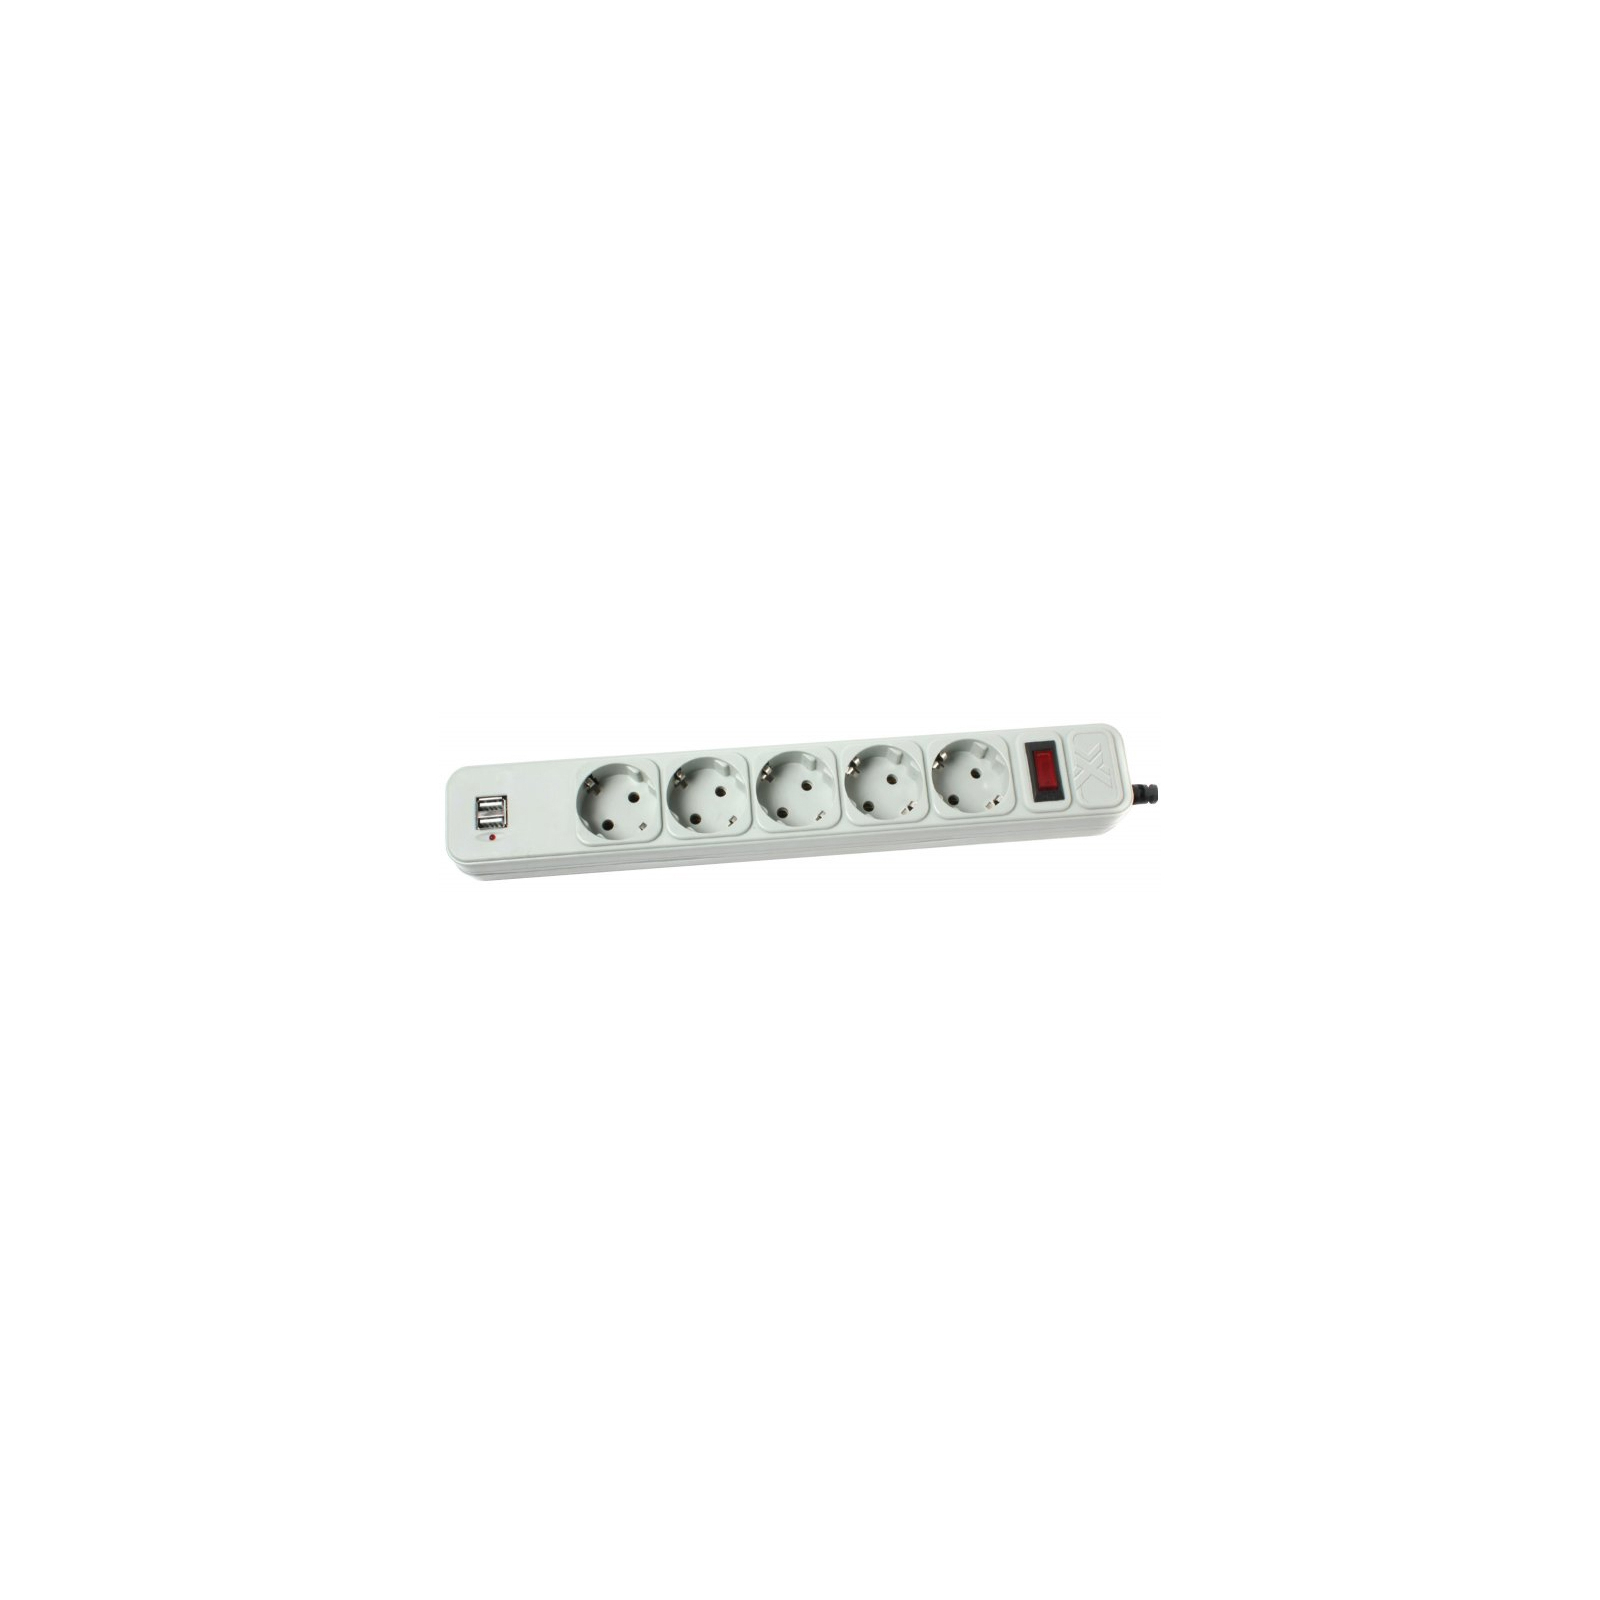 Сетевой фильтр питания Maxxtro PWE-05K-3, серый, 3 м кабель, 5 розеток, USB зарядка 2А (PWE-05K-3)